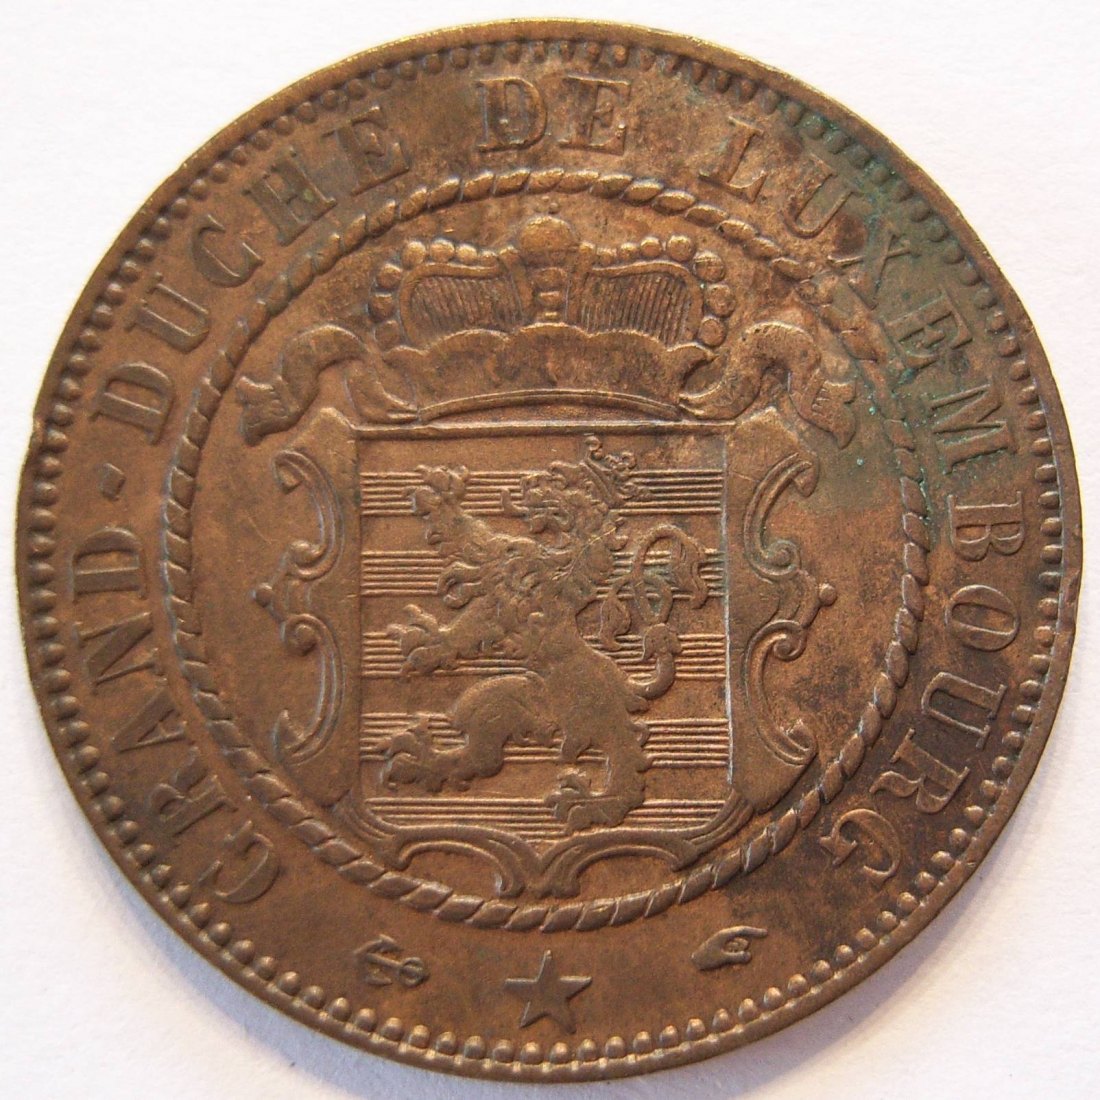  Luxemburg 10 Centimes 1855 A ERHALTUNG !!   